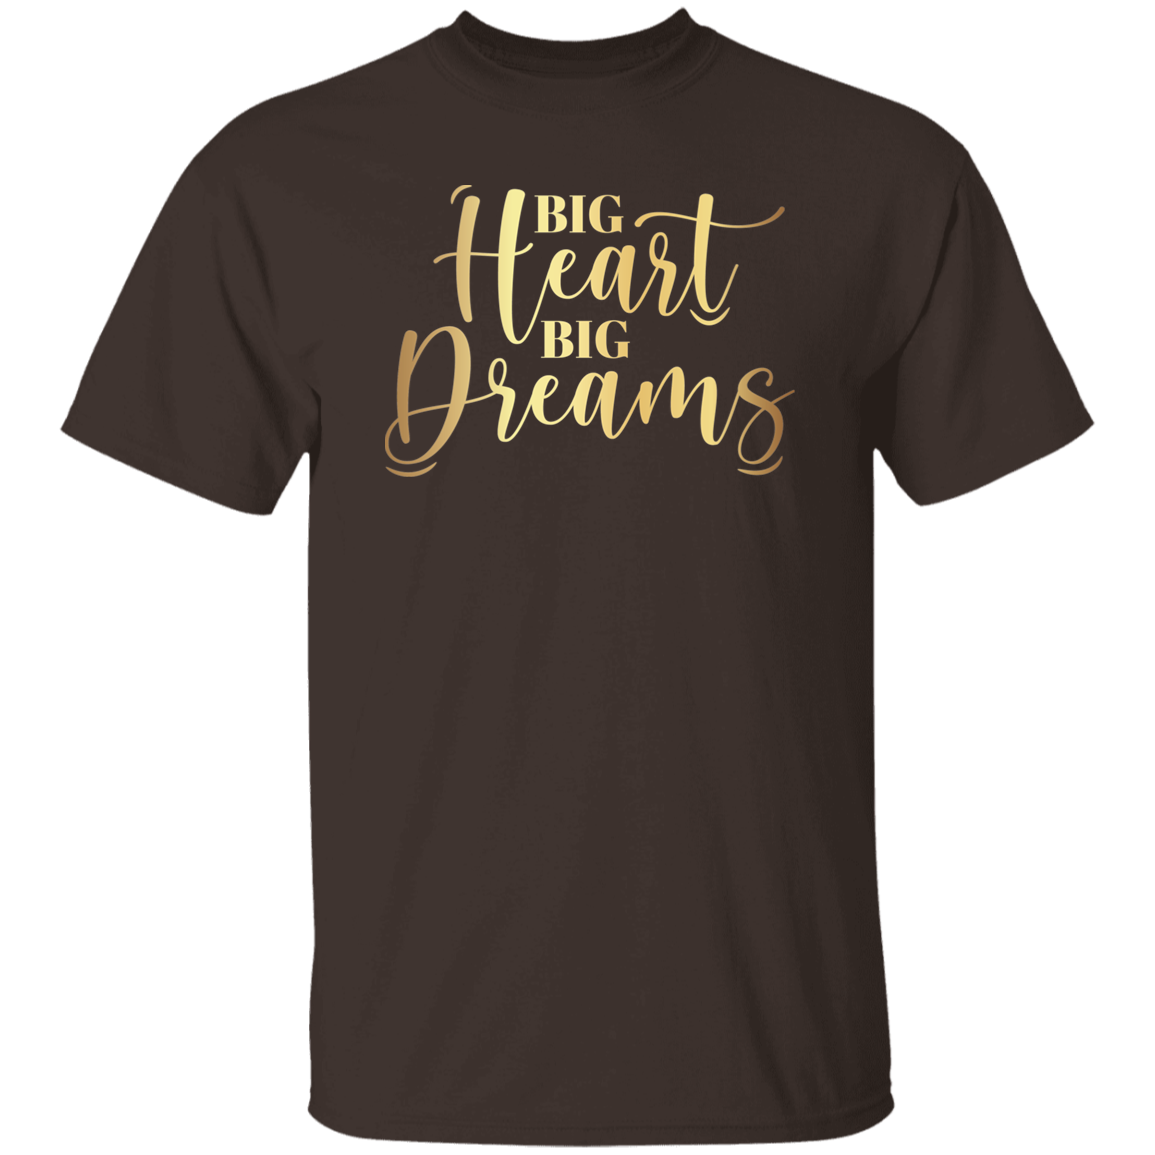 Dreams T-Shirt